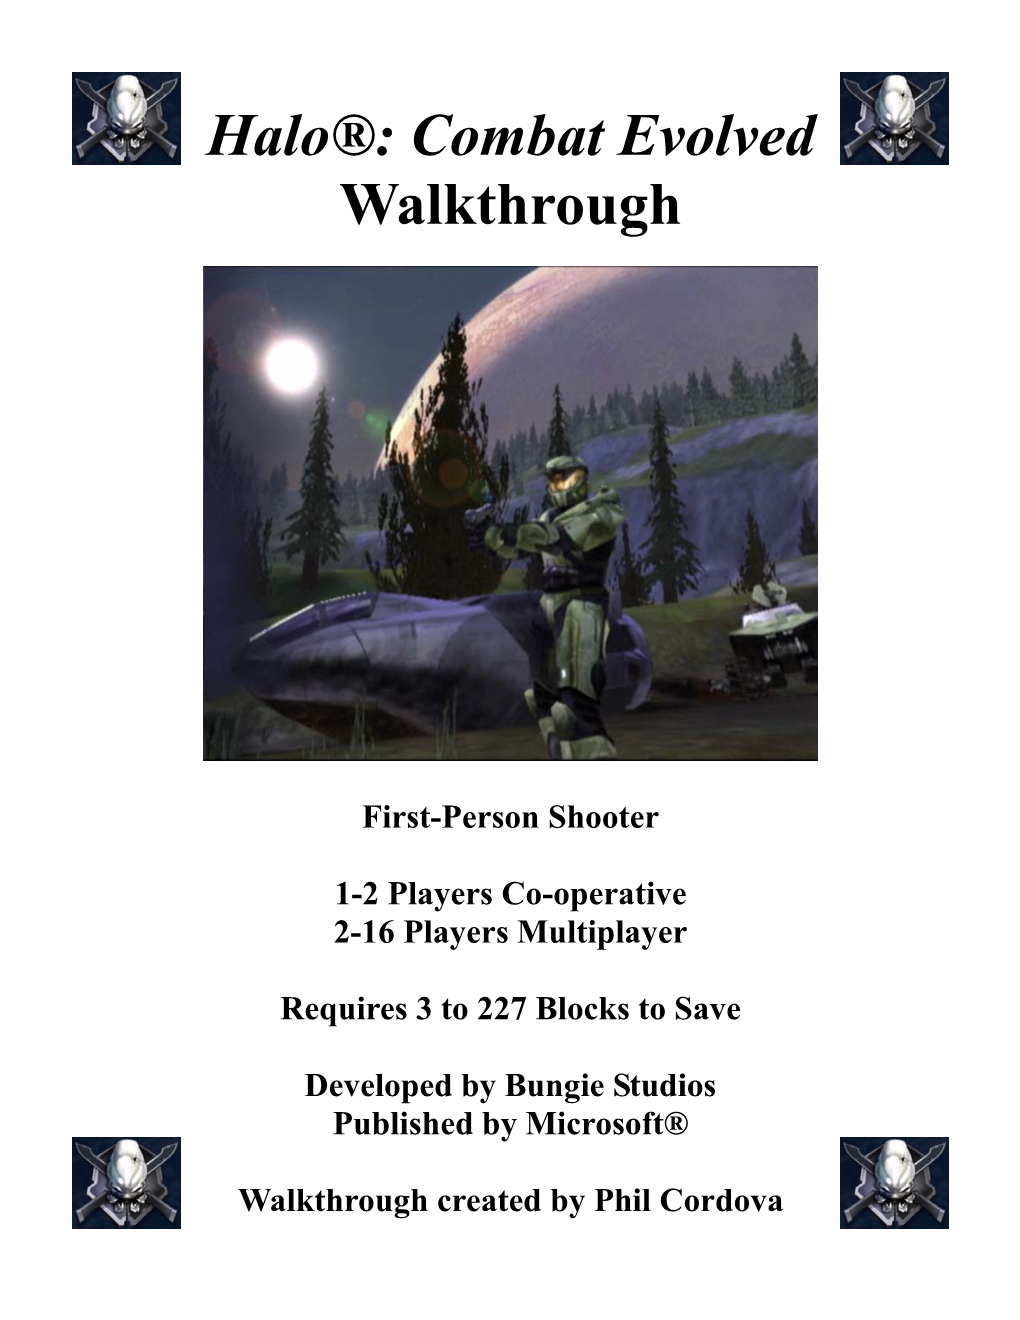 Halo Walkthrough Halo®: Combat Evolved Walkthrough